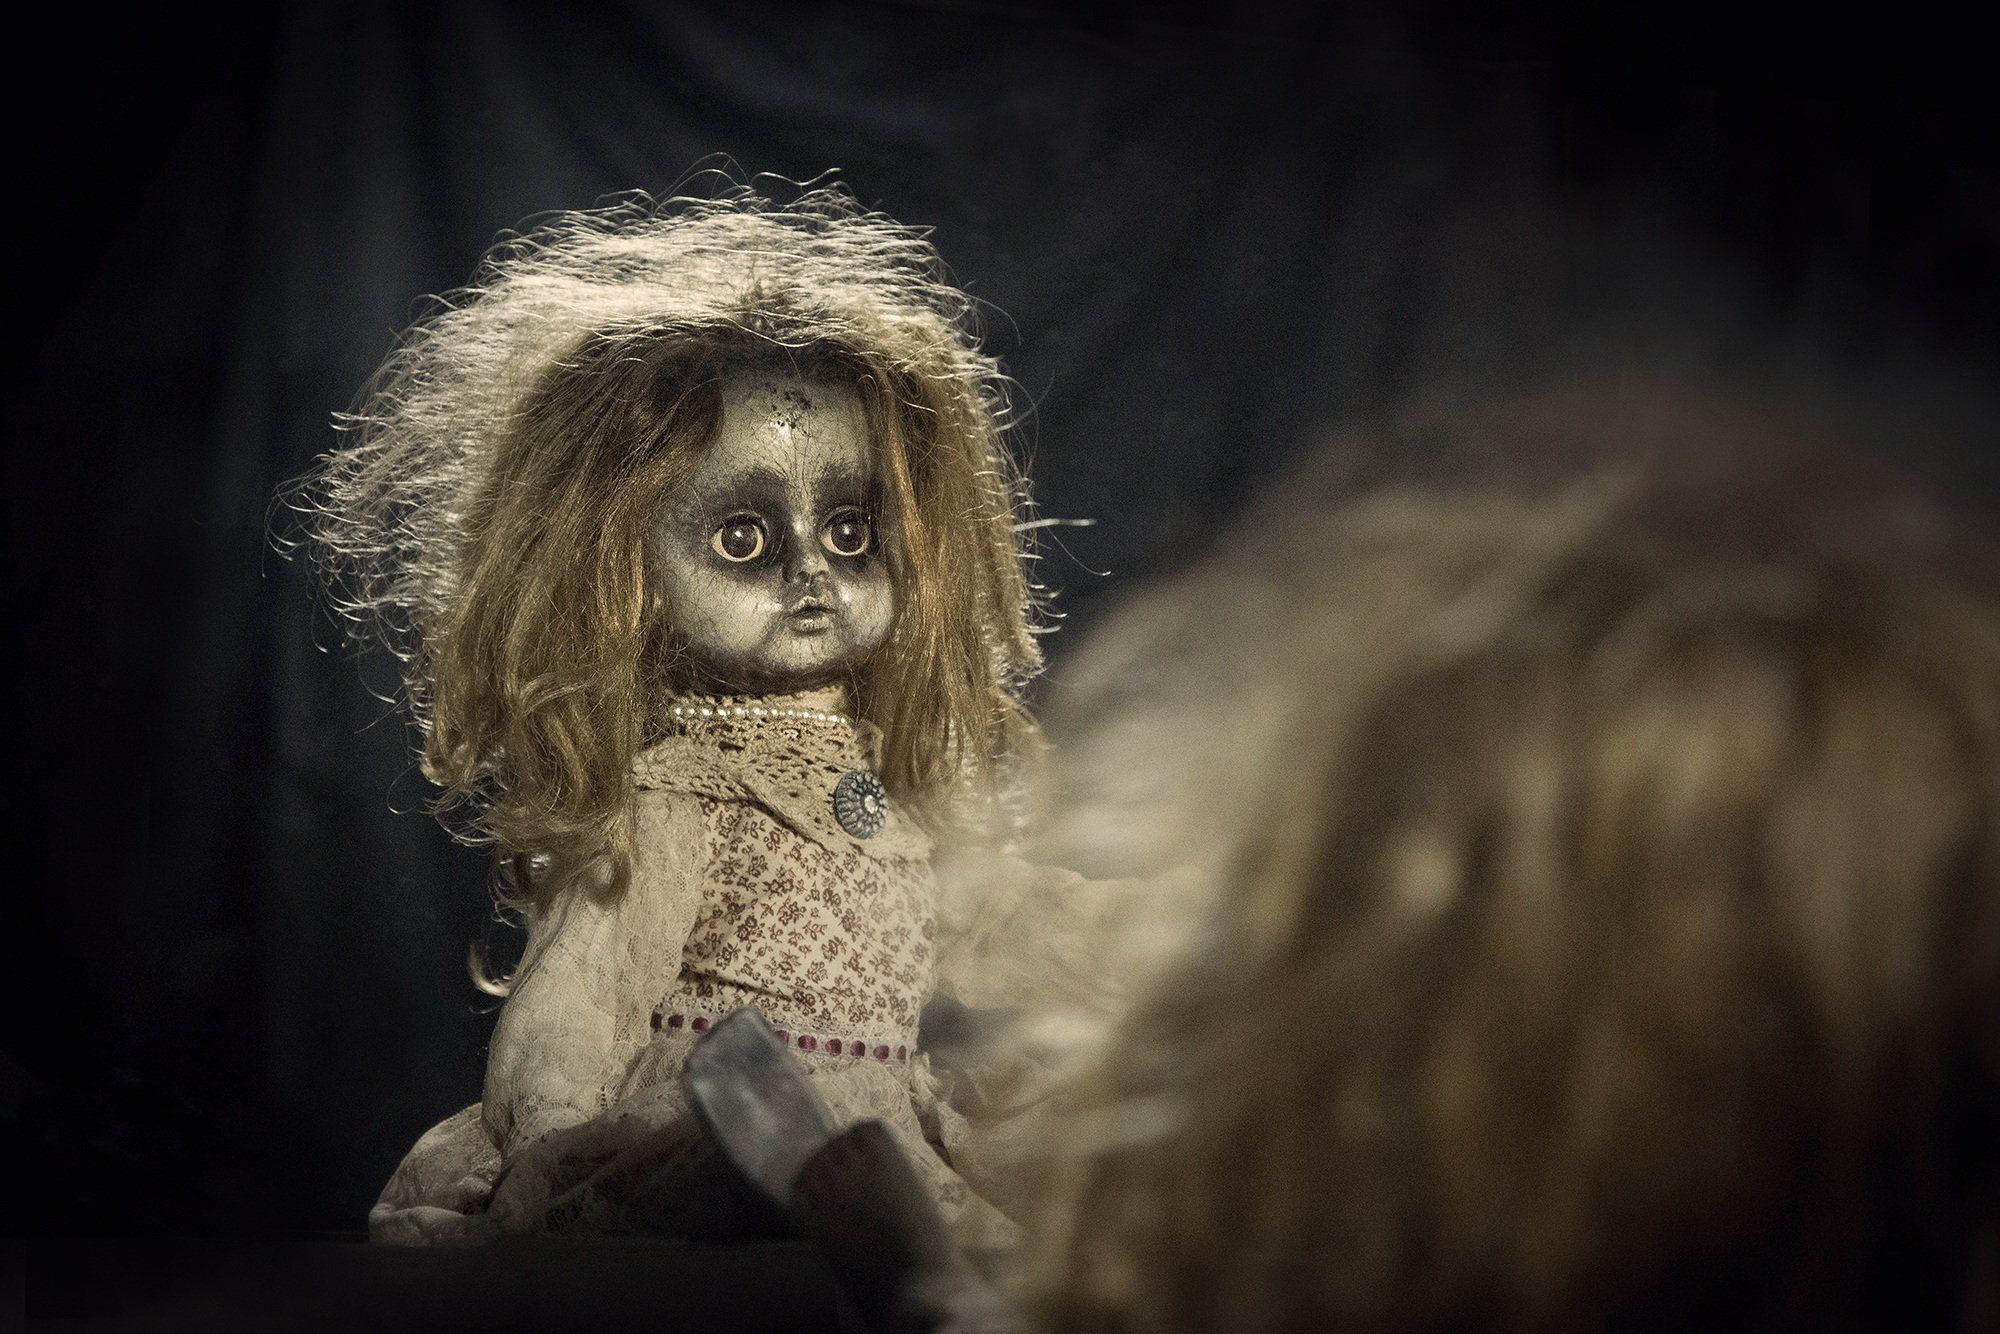 Doll Creepy Spooky Horror toy child gothic dark wallpaperx1334